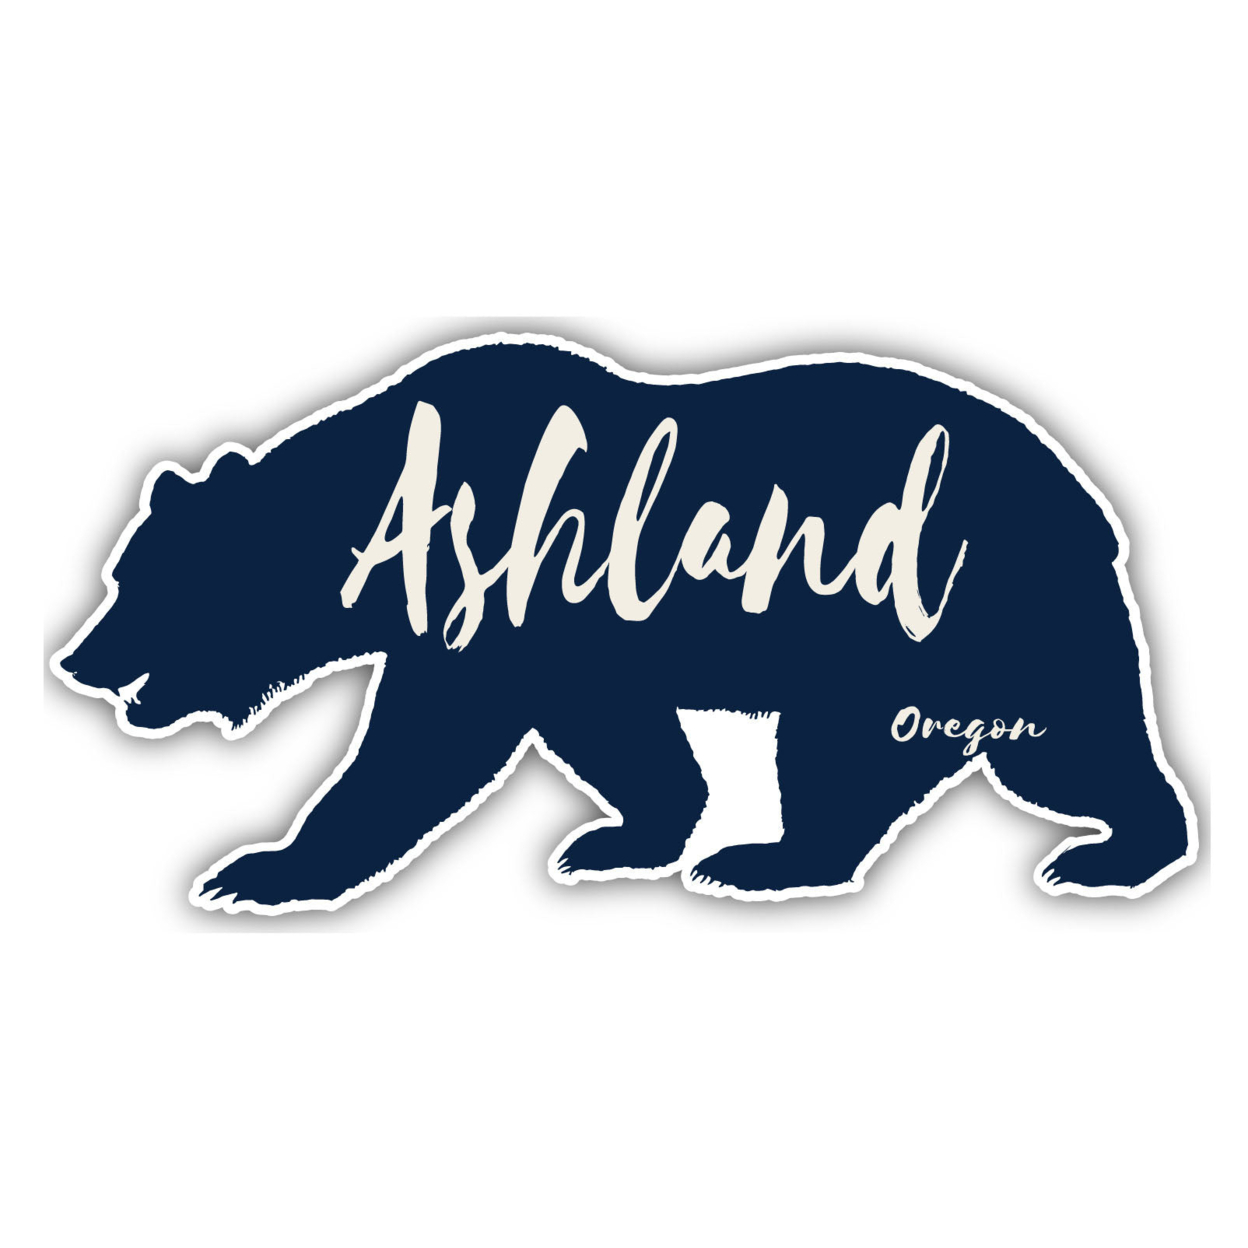 Ashland Oregon Souvenir Decorative Stickers (Choose Theme And Size) - Single Unit, 8-Inch, Camp Life